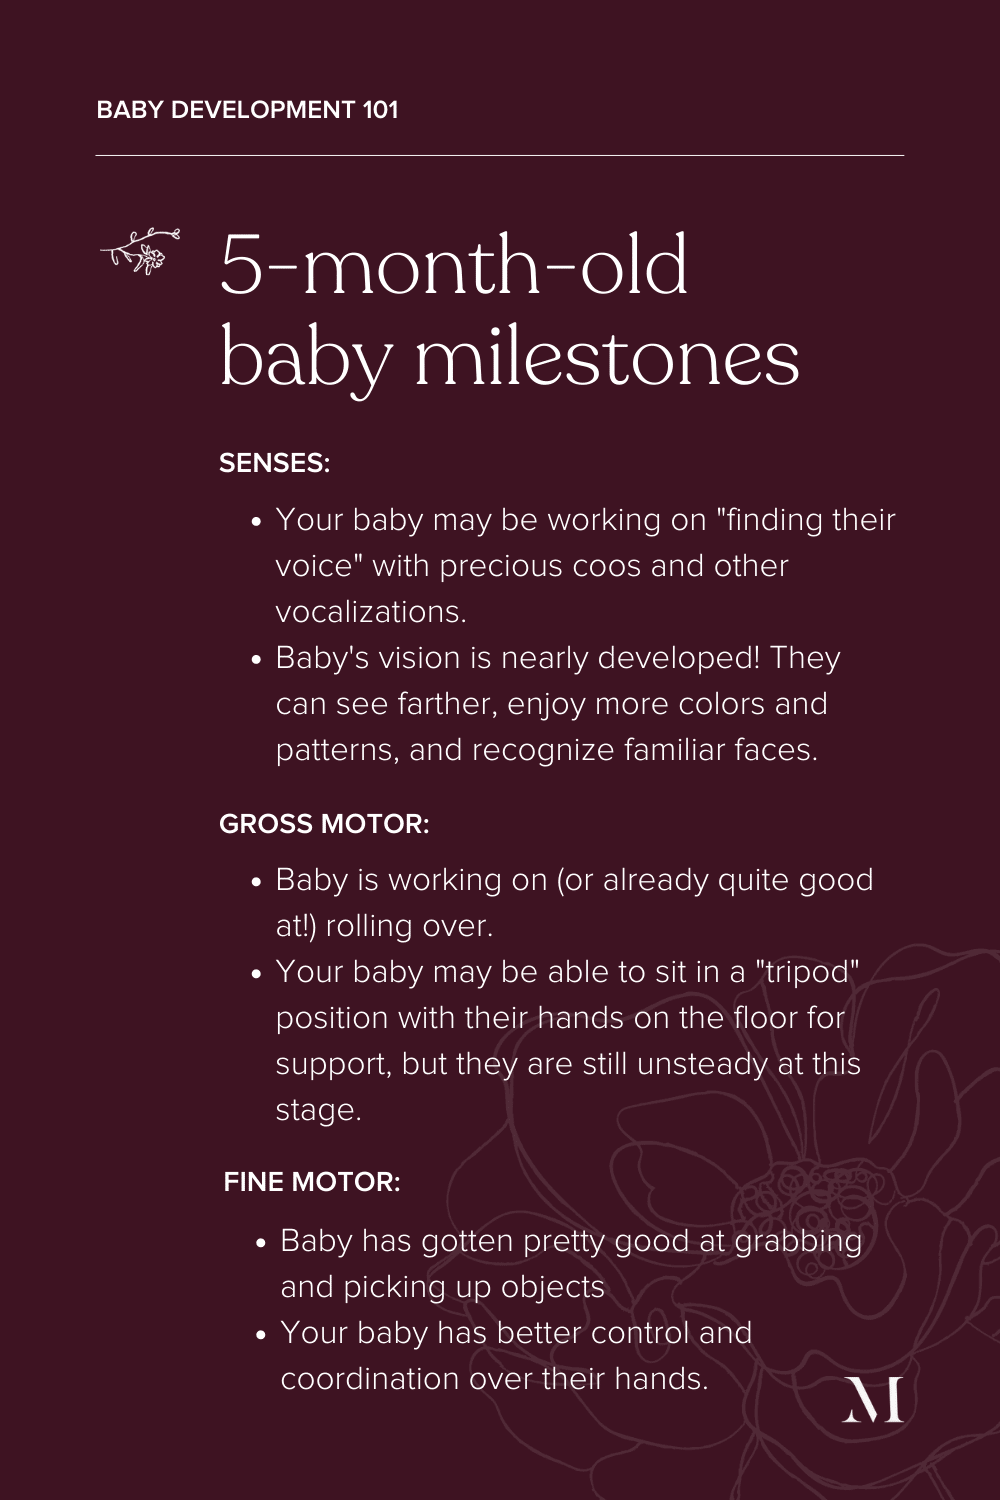 summary of 5-month-old baby milestones - sensory and motor development